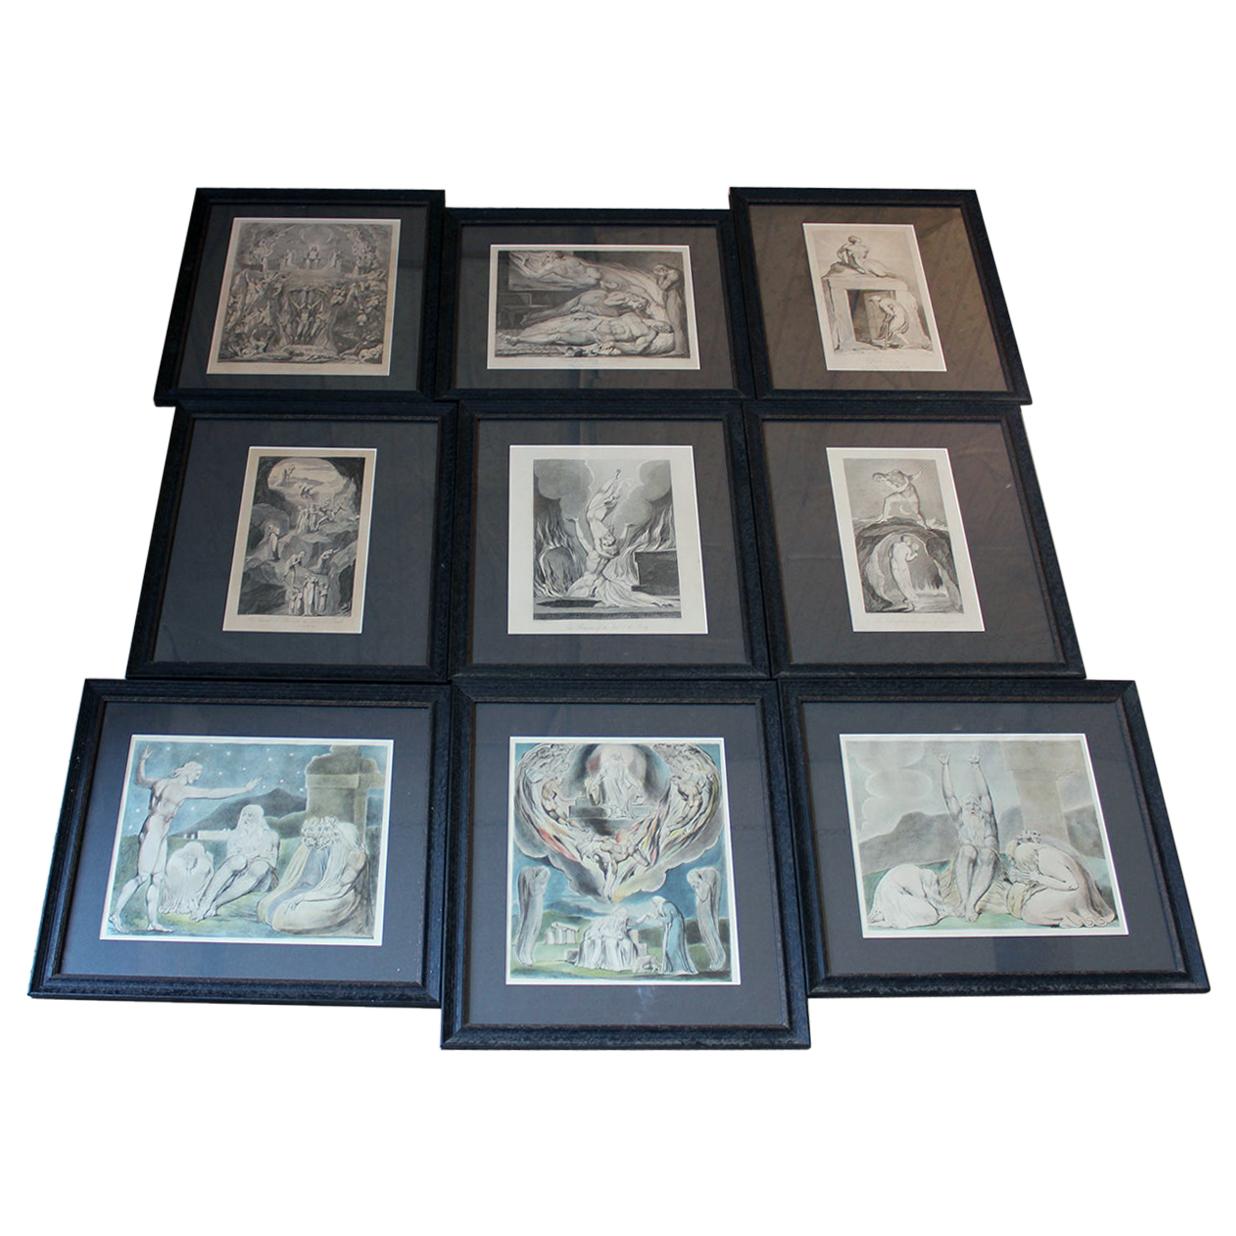 Group of 9 William Blake Artworks, 6 Engravings & 3 Watercolors